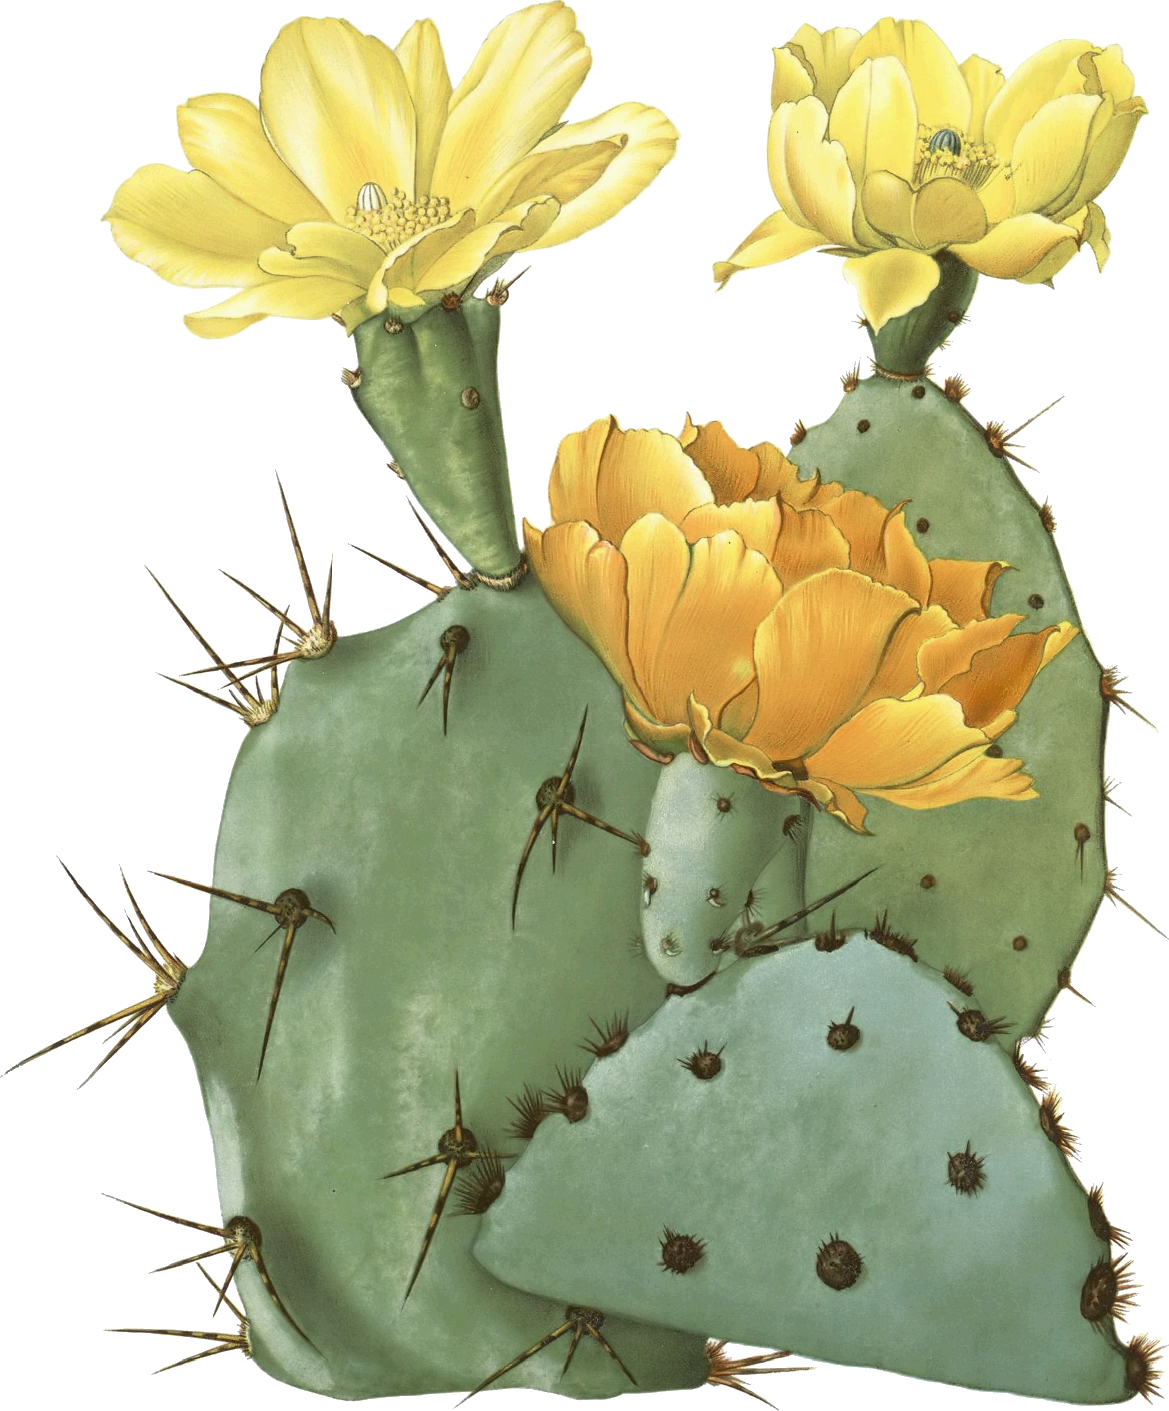 Drawn Cactus Prickly Pear Cactus - Prickly Pear Cactus Transparent (1169x1411)